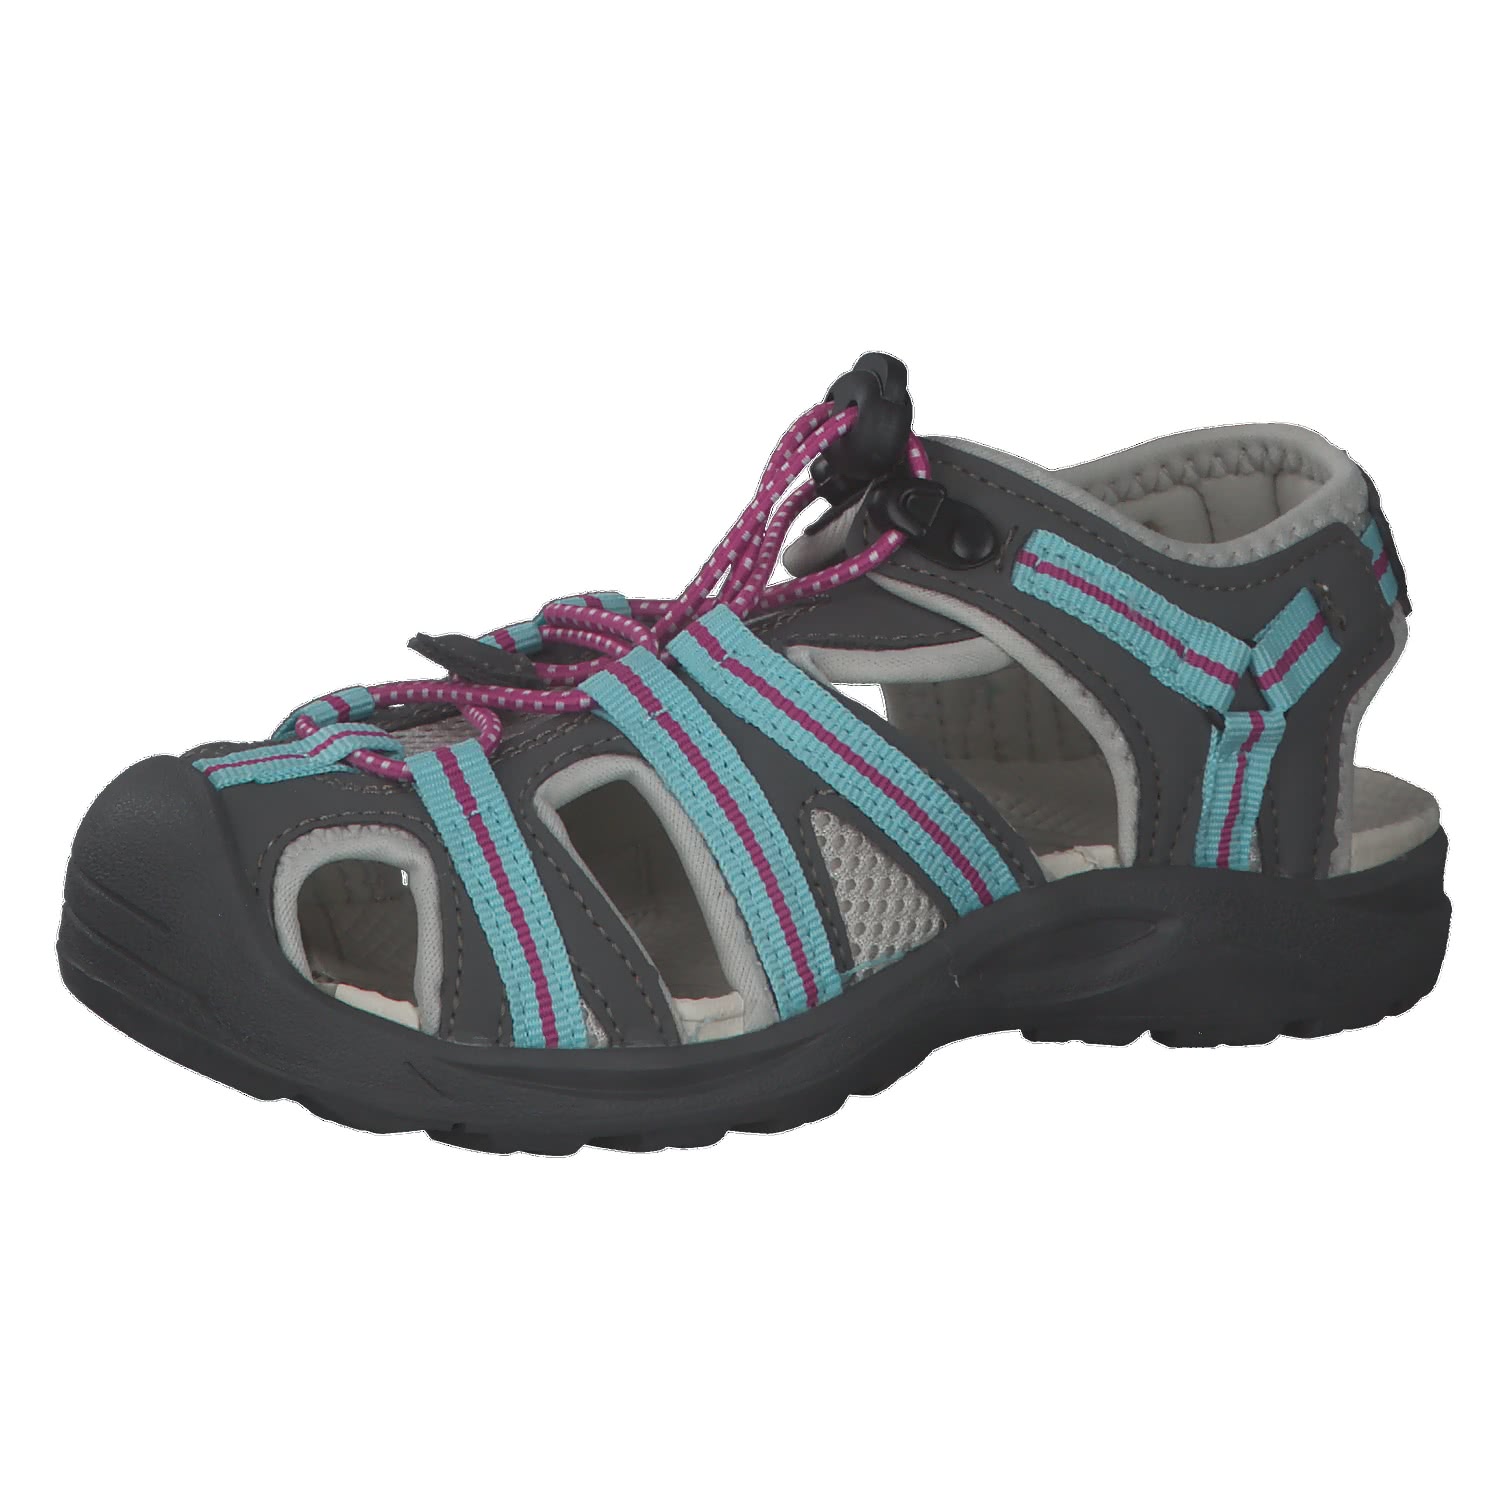 Sandal Aquarii | eBay Sandale 30Q9664 Hiking Kinder CMP 2.0